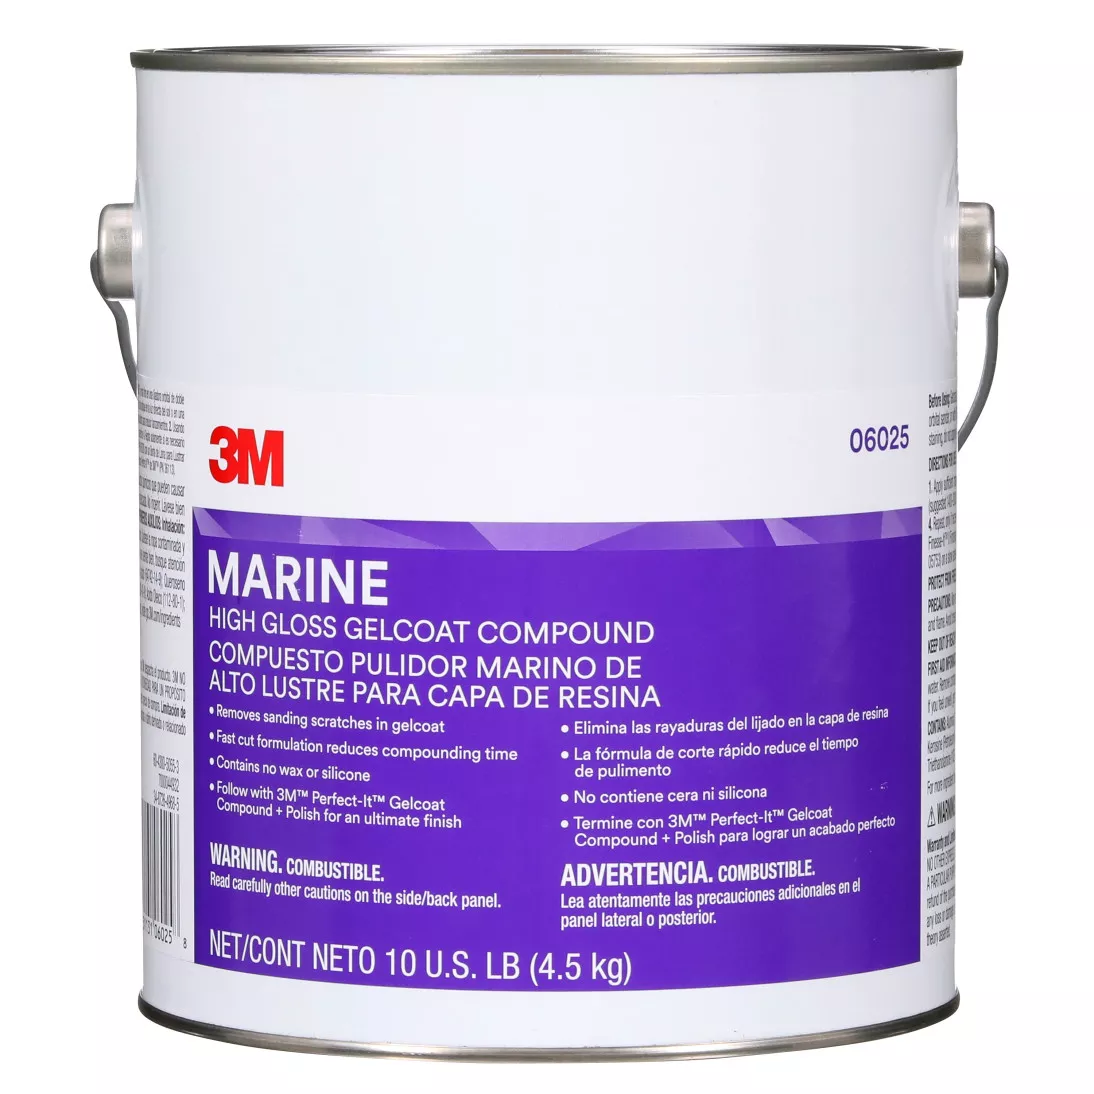 3M™ Marine High Gloss Gelcoat Compound, 06025, 10 lb, 4 per case